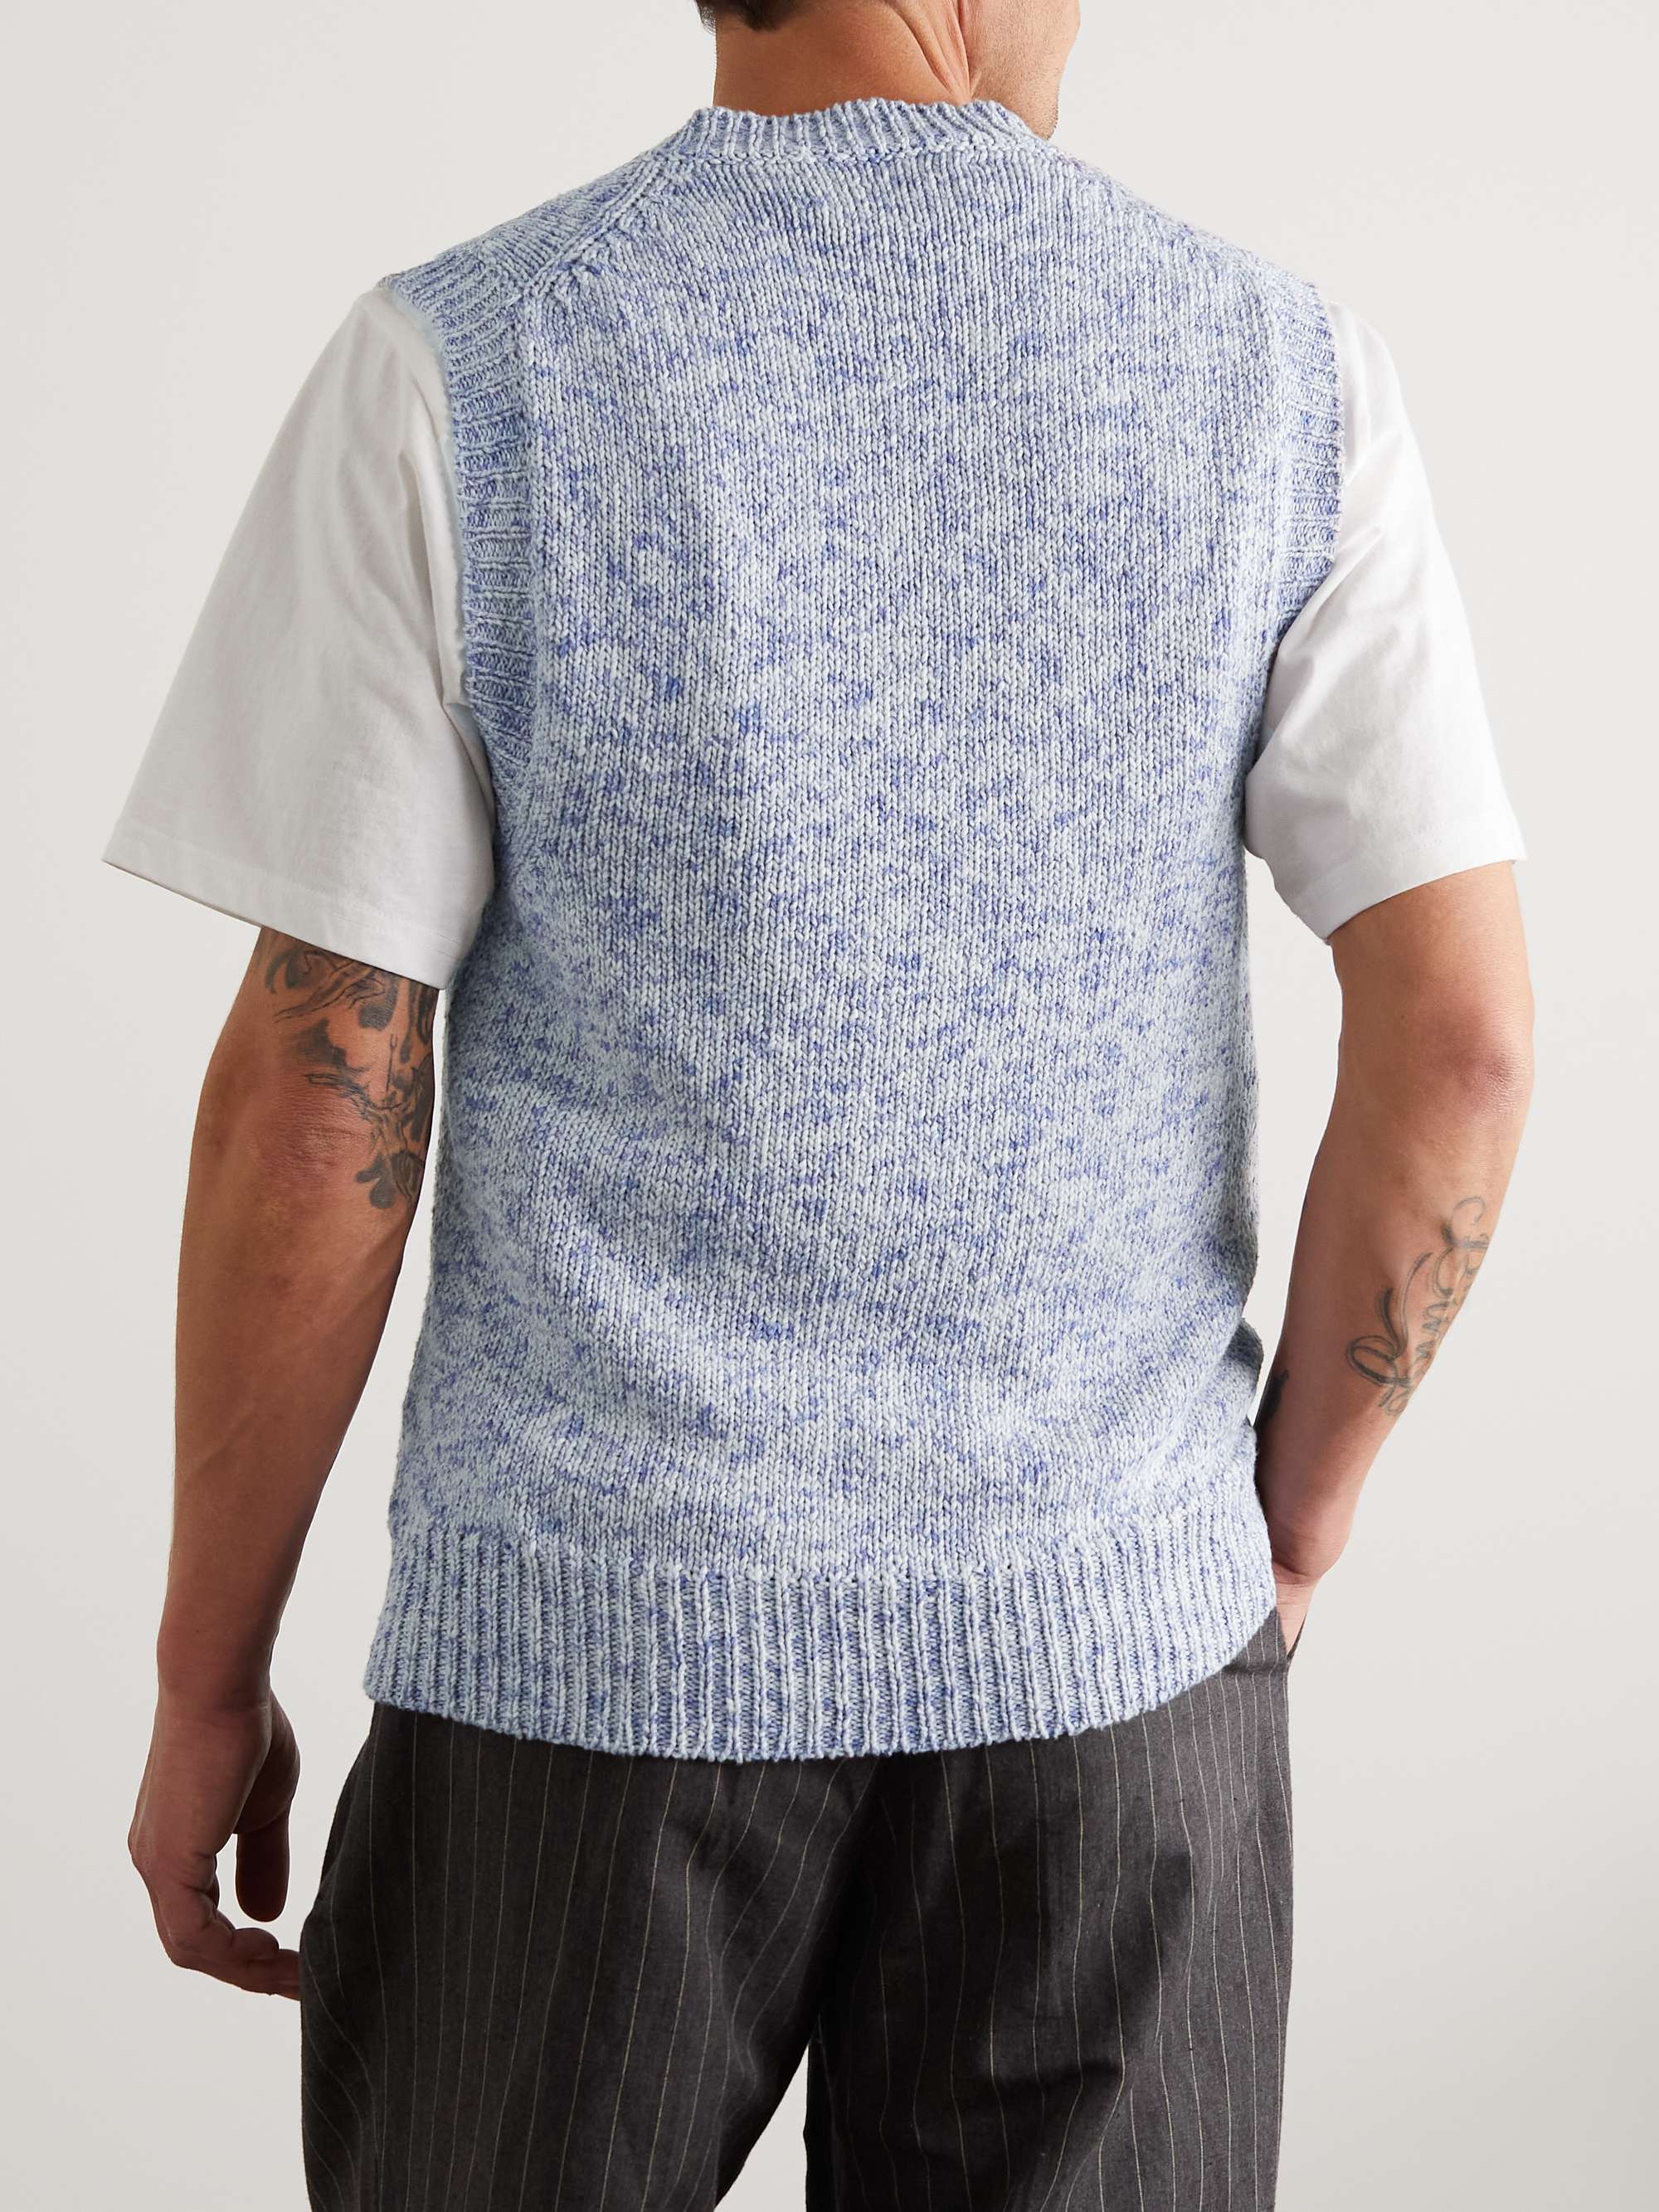 MILES LEON Slim-Fit Cotton Sweater Vest for Men | MR PORTER